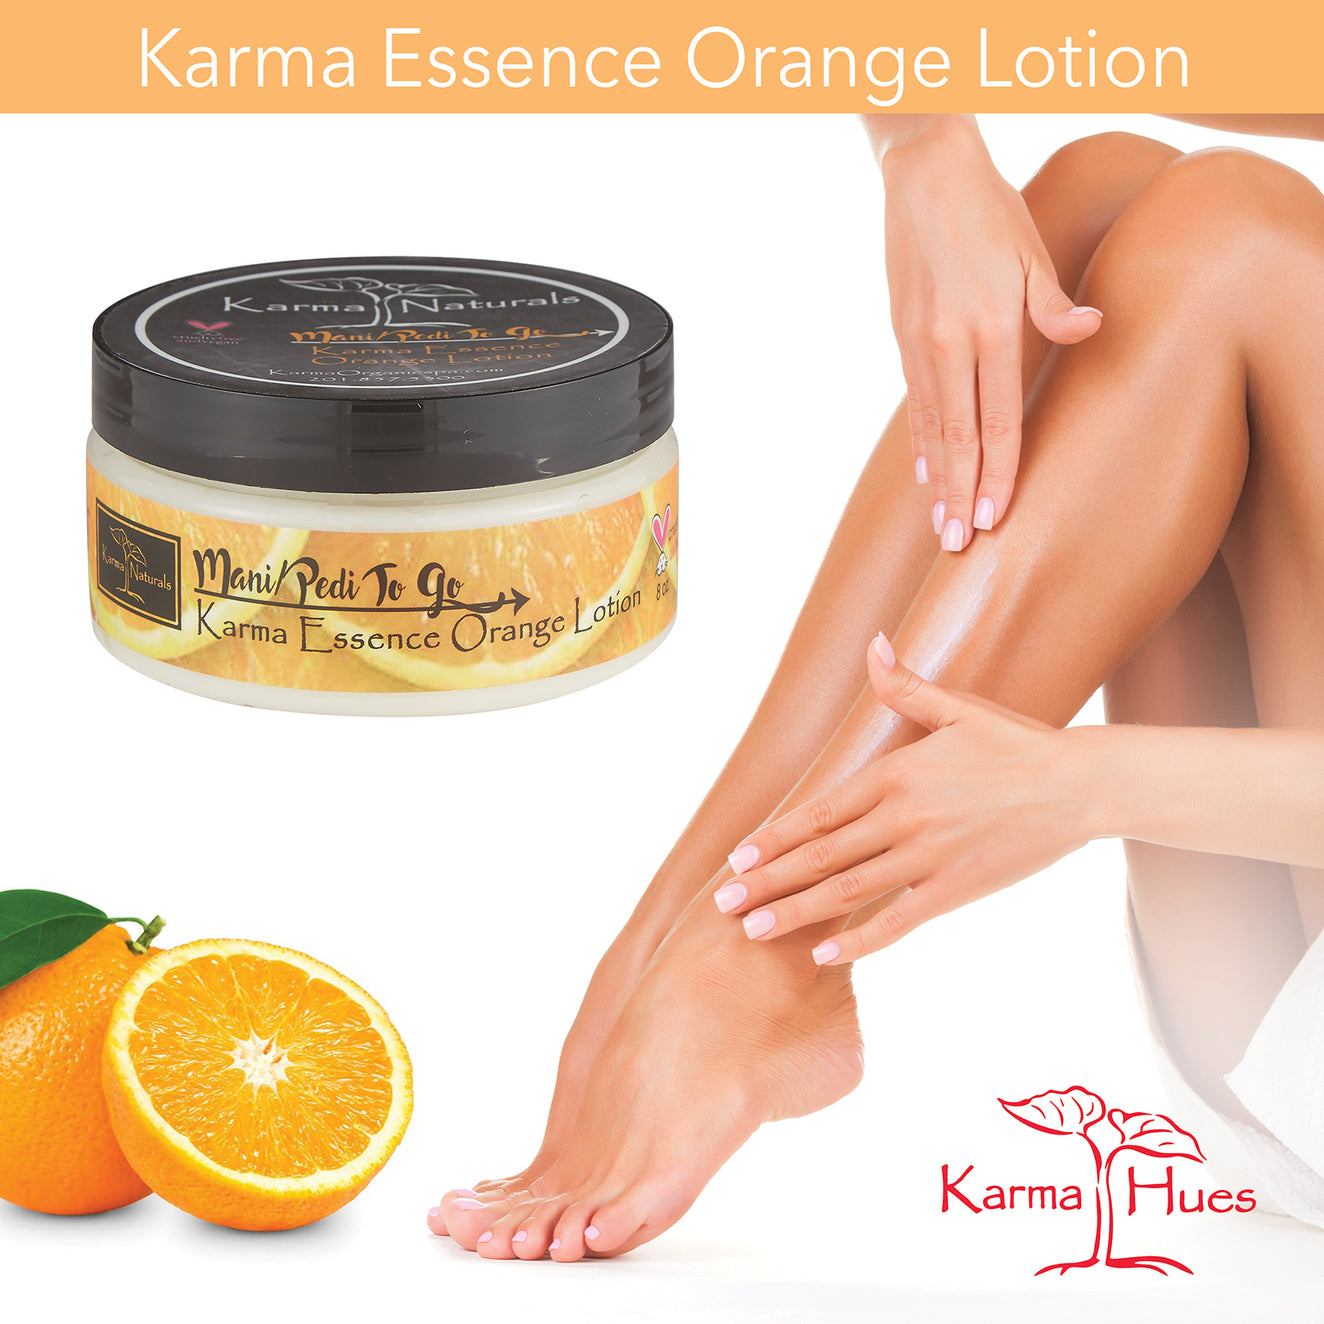 Karma Naturals Essence Orange Lotion